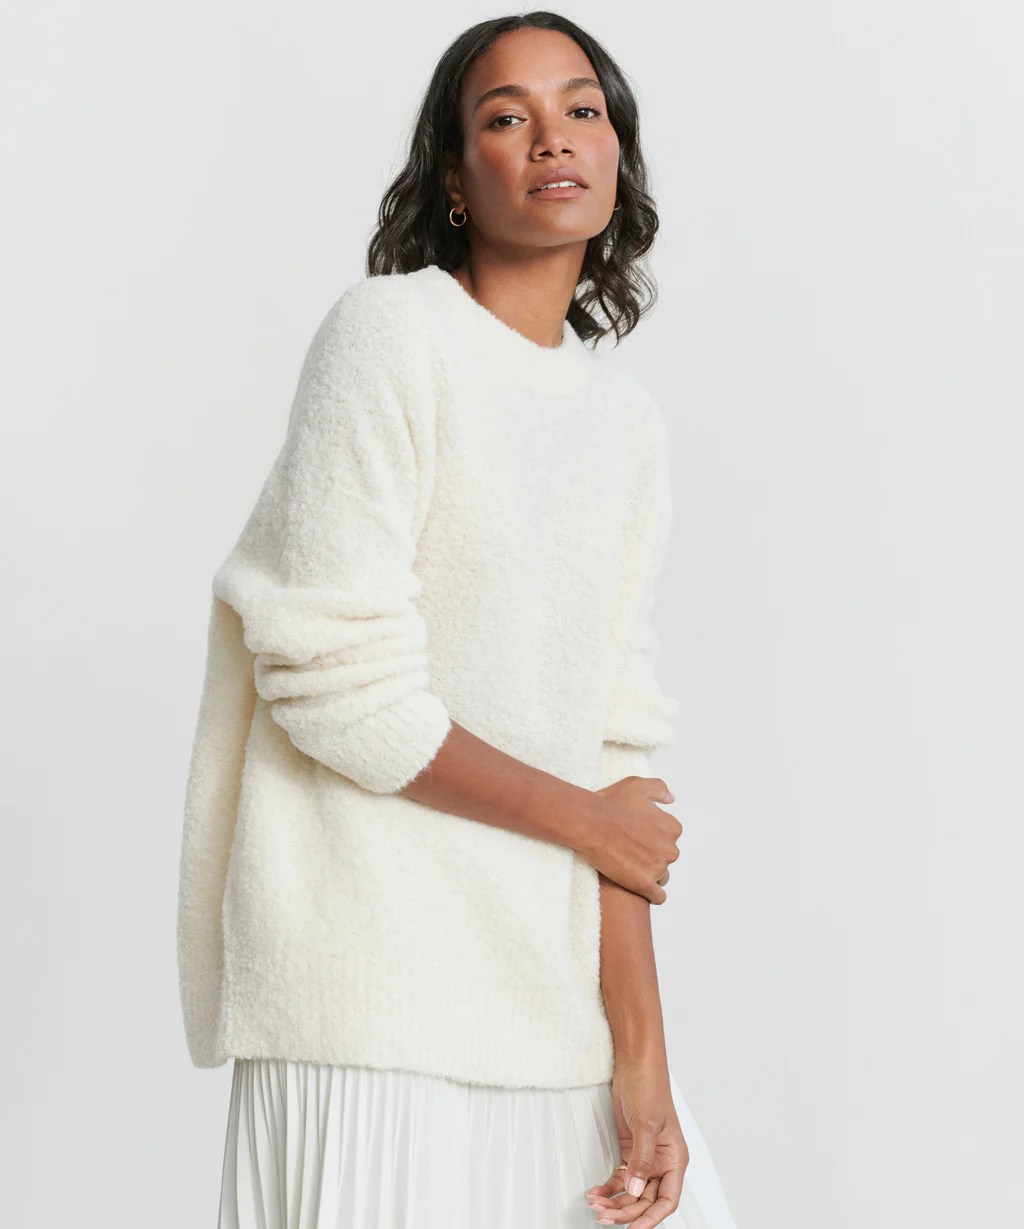 Jenni Kayne Sweaters: 6 Timeless Options You'll Love | Well+Good